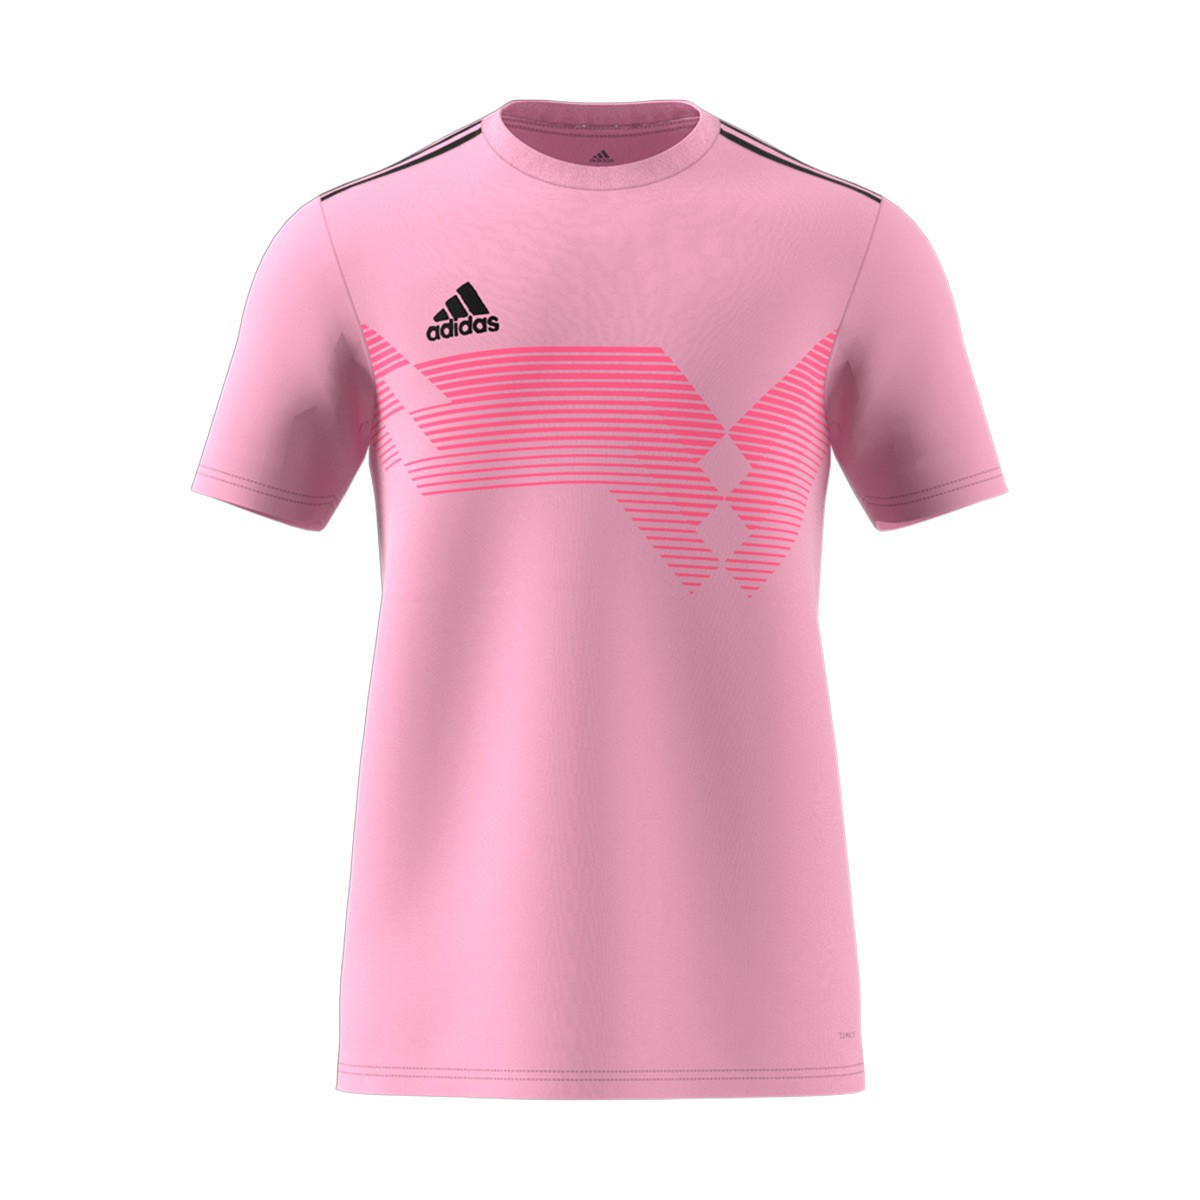 adidas campeon pink